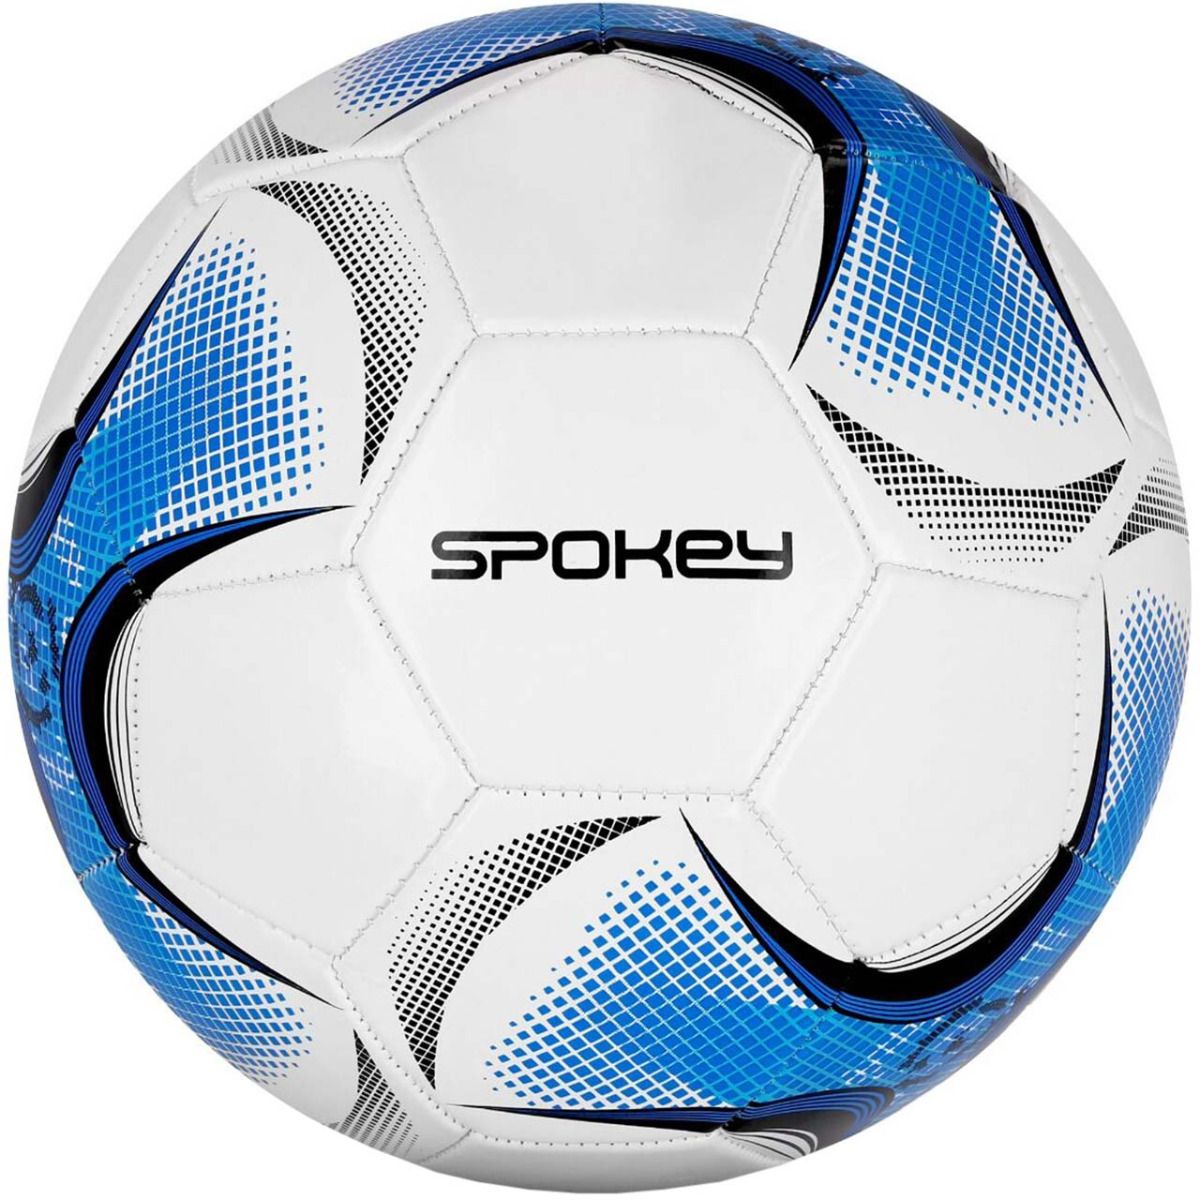 Spokey Fußball Goal 929836